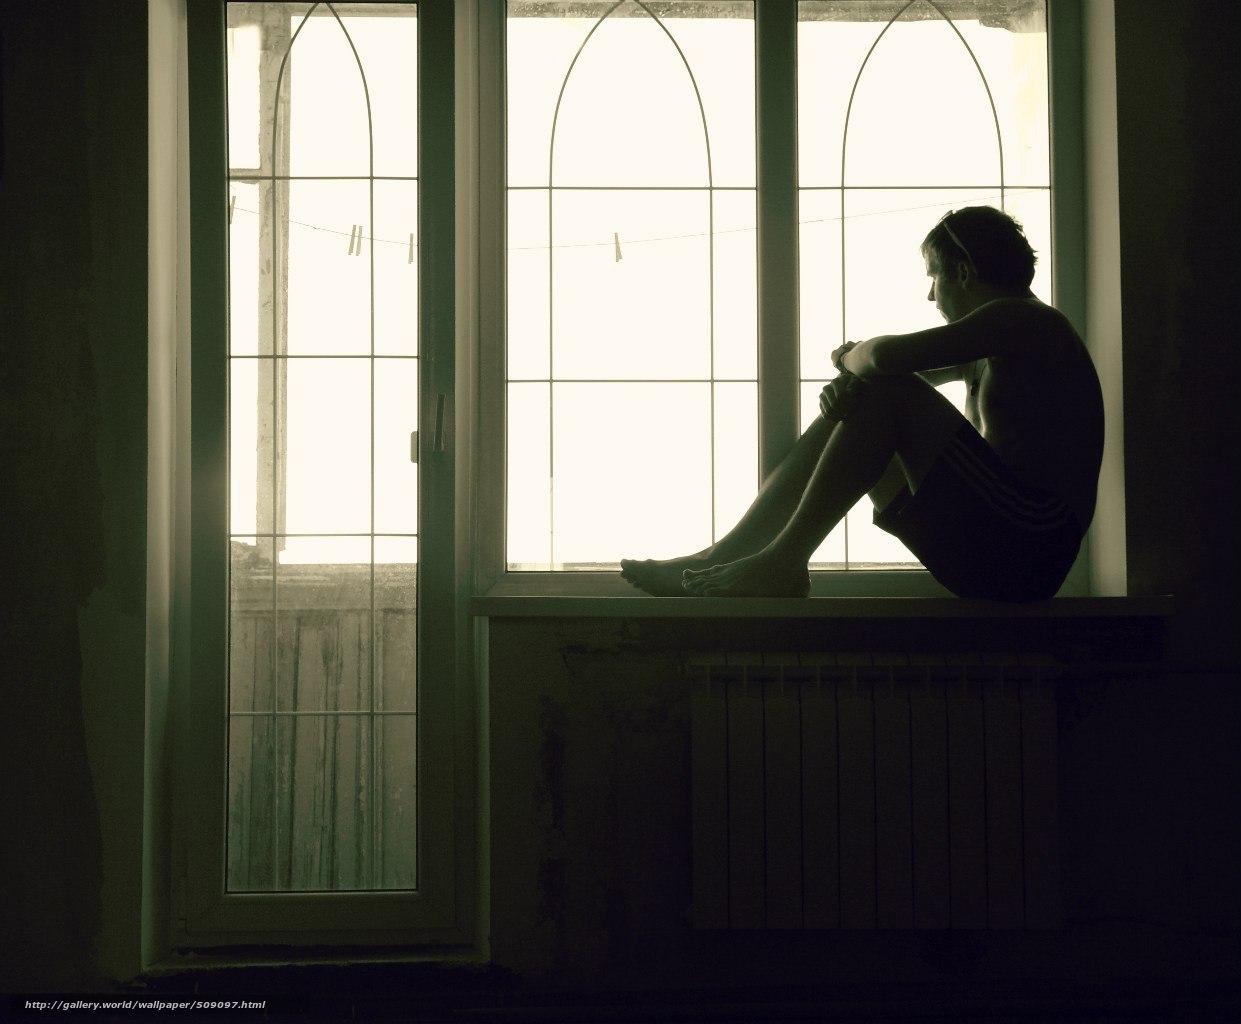 Найди одинокого мужчину. Одинокий парень. Одно окно. Мужчина грустит у окна. Одиночество в доме.